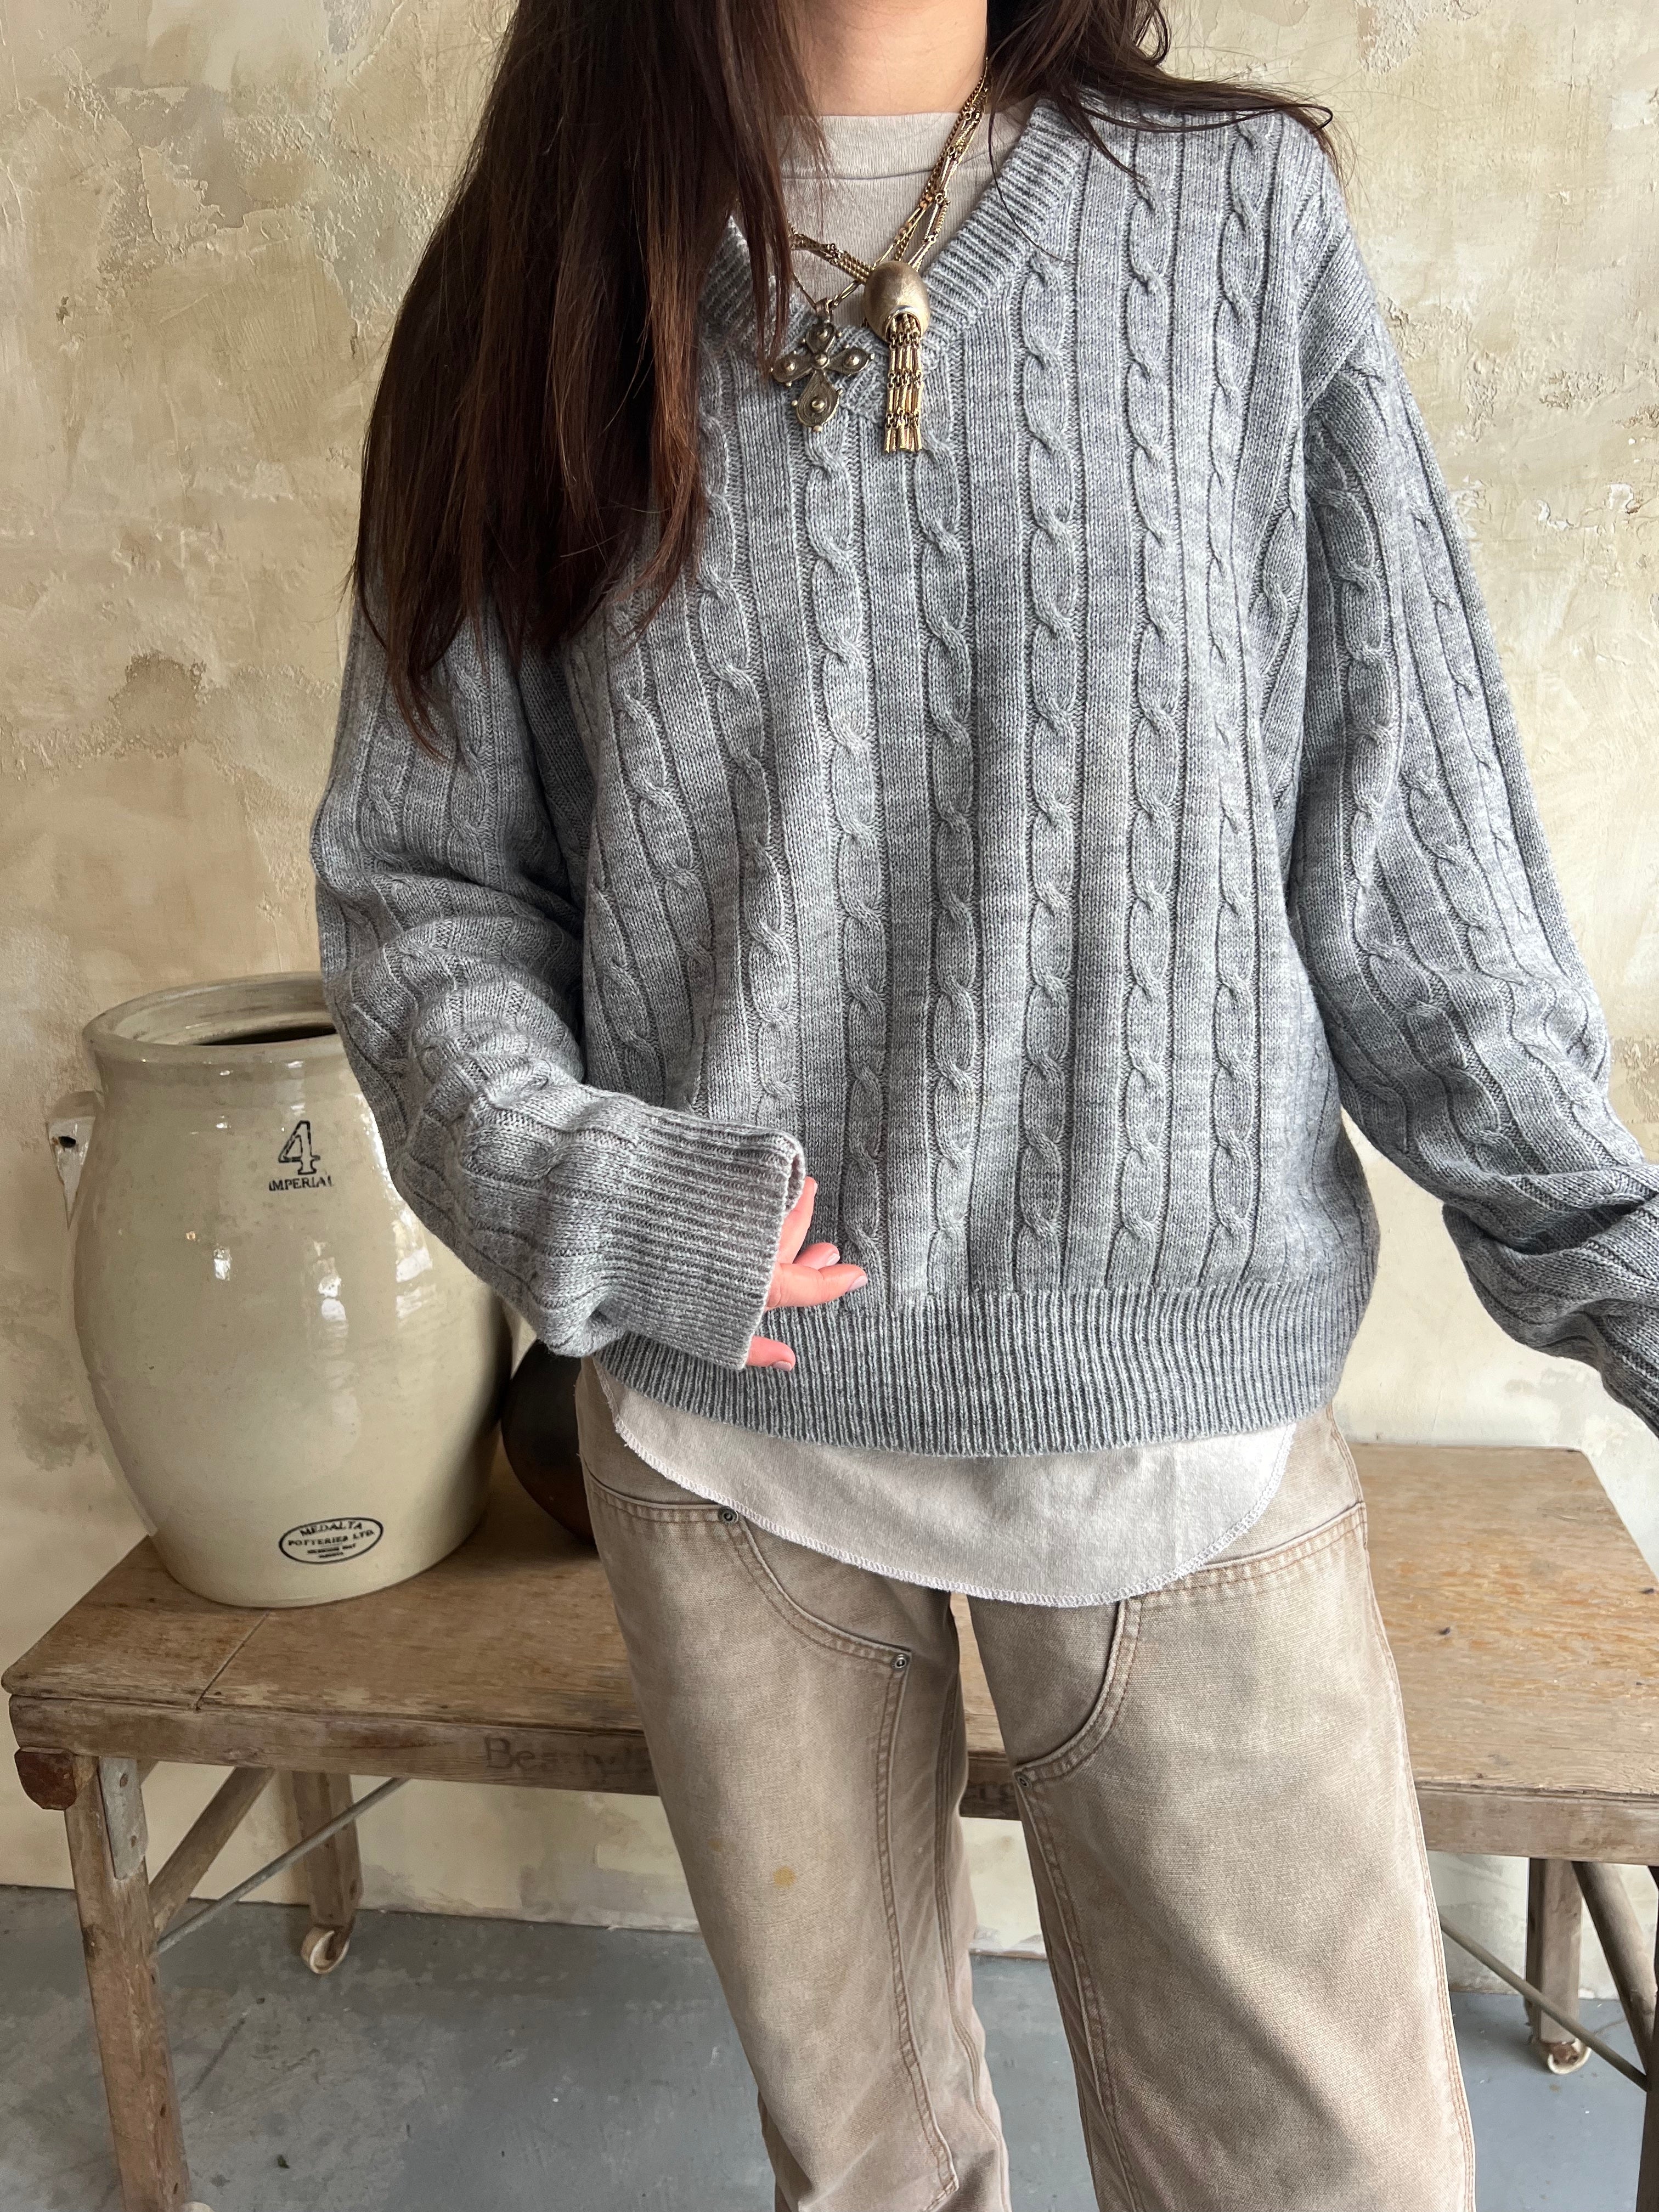 Heather Grey Sweater